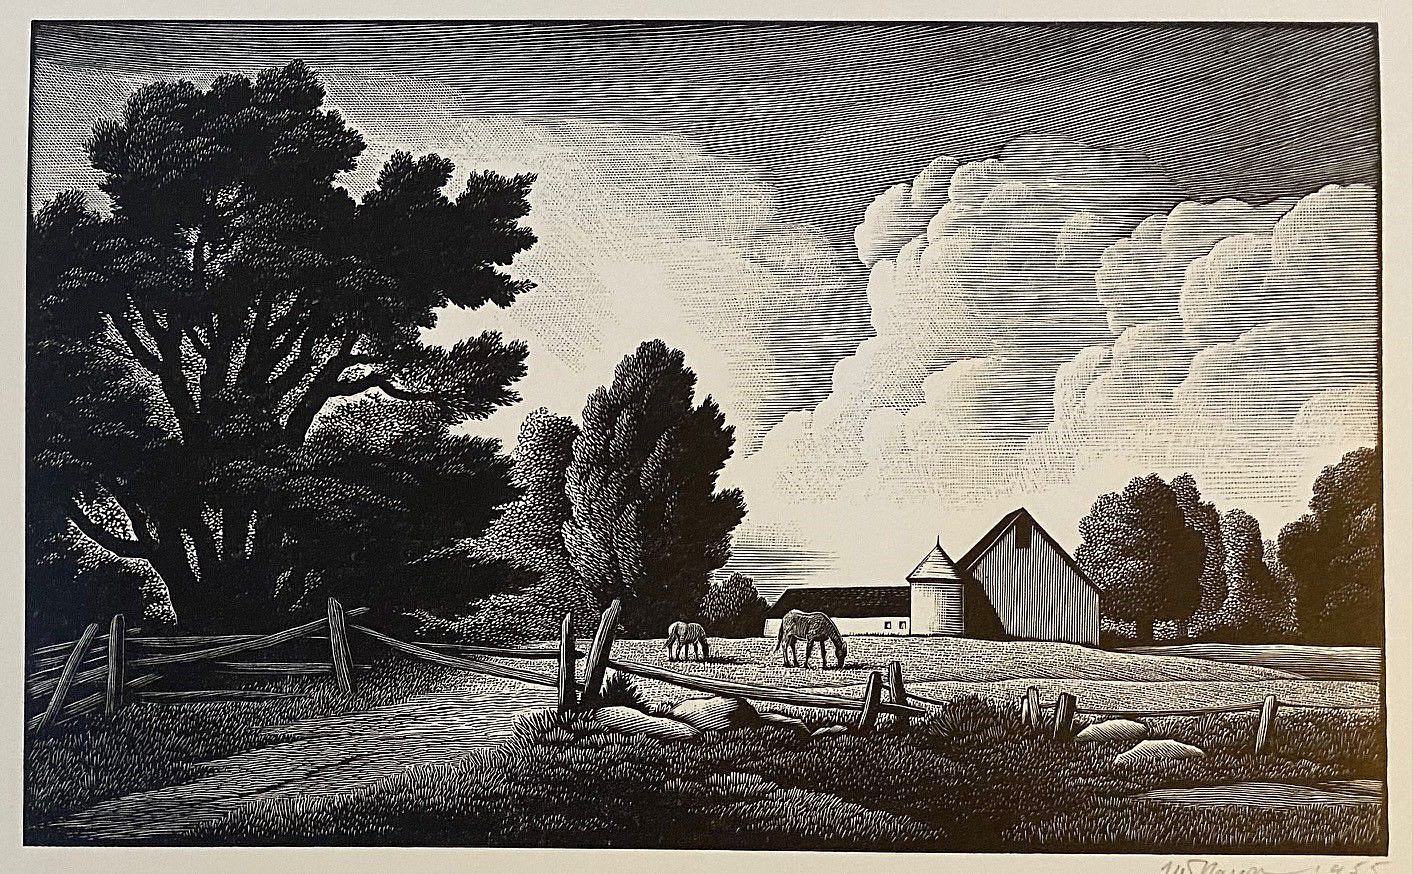 Thomas Willoughby Nason, The Little Farm, 1955
woodblock print on paper, 5 1/2"" x 9""
JCA 6738
$1,200